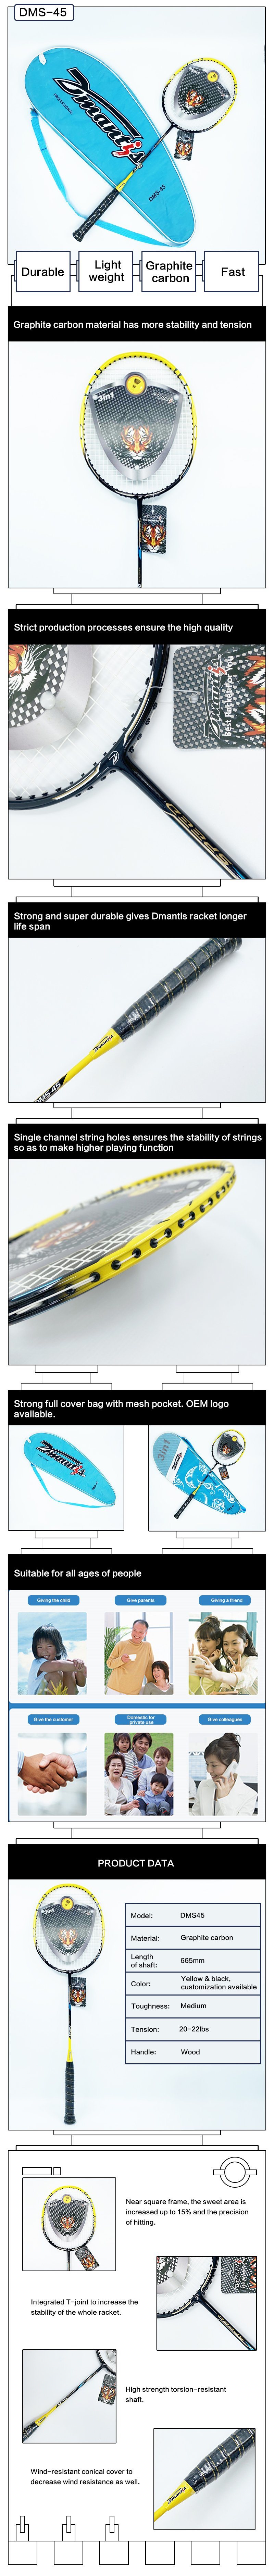 Hot Selling Full Carbon Fiber Badminton Racket with String Super Light Racquet